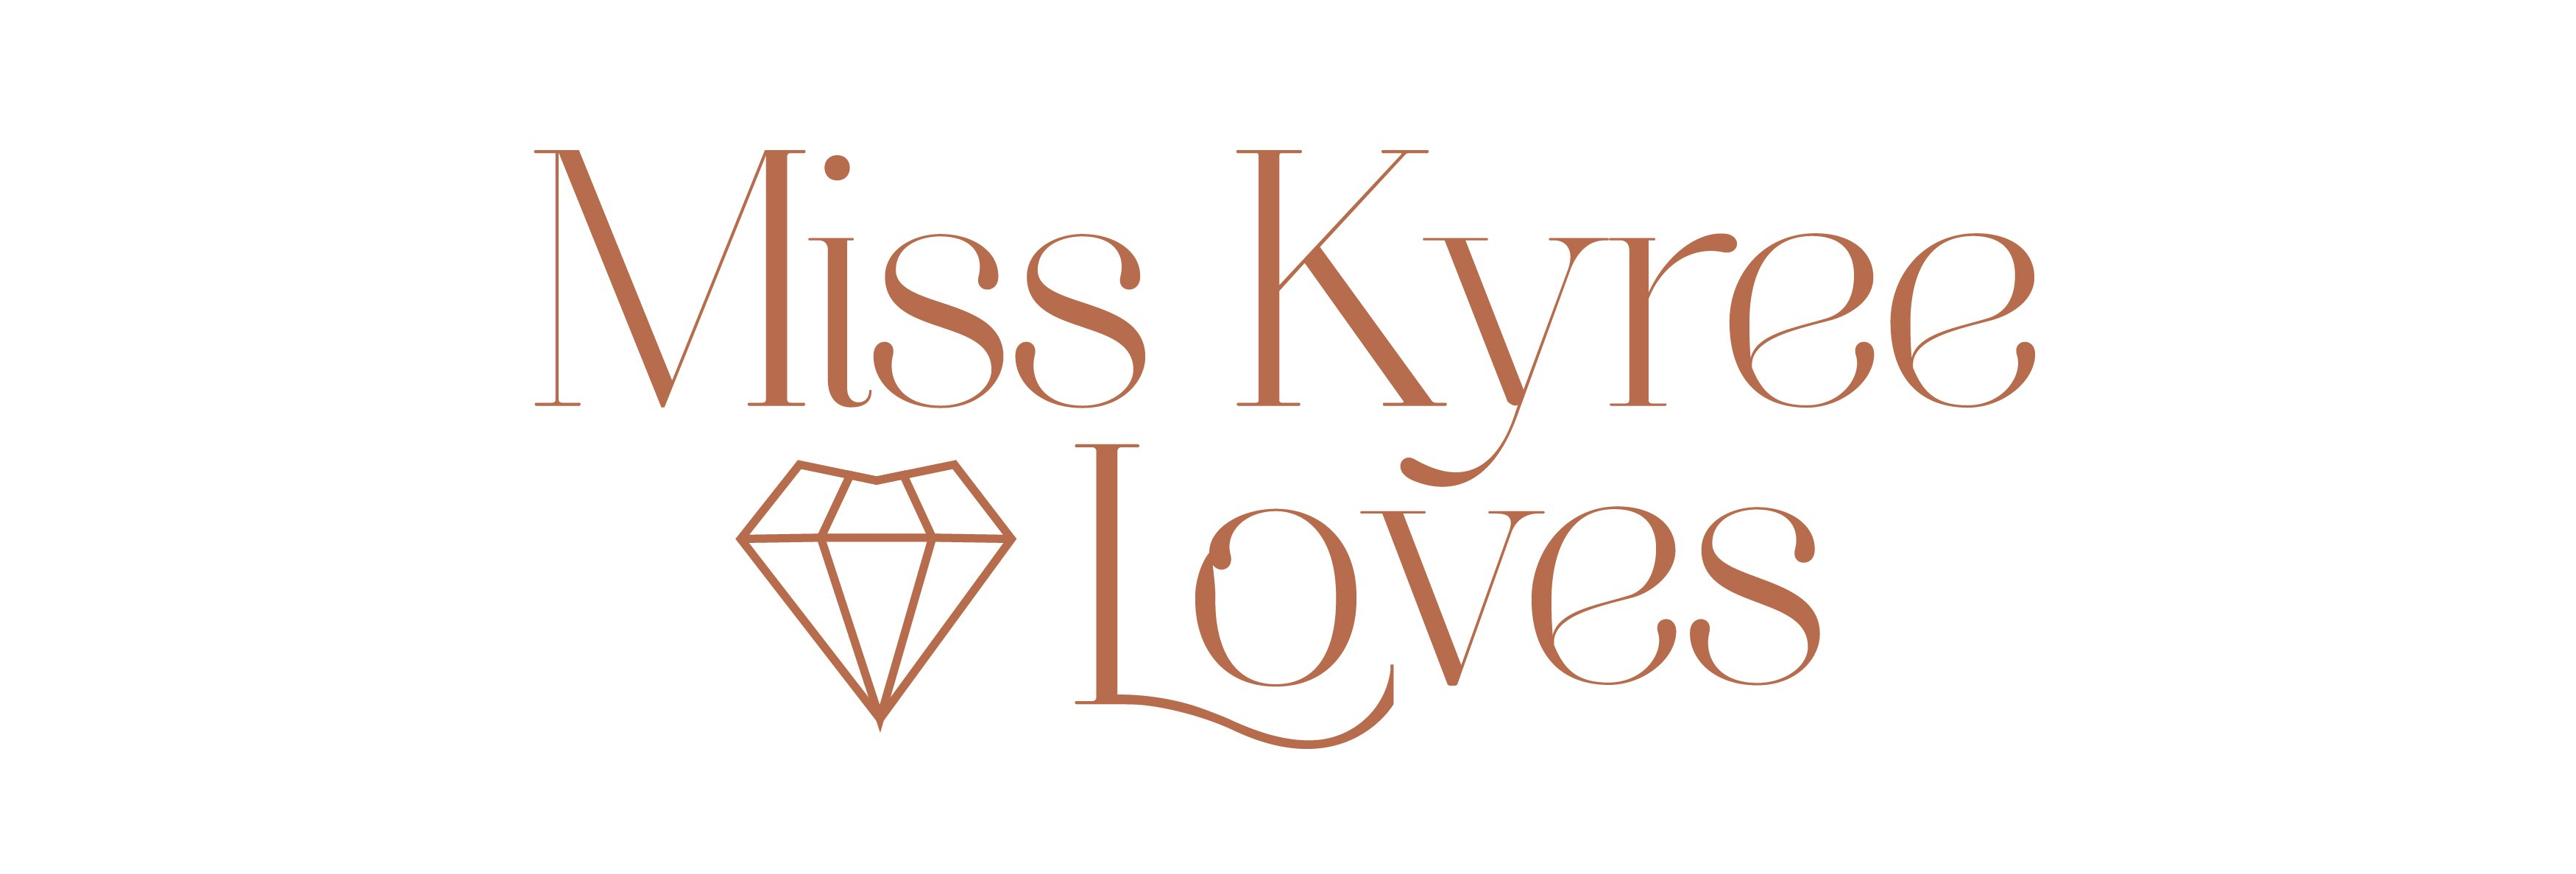 Miss Kyree Loves - Primary05